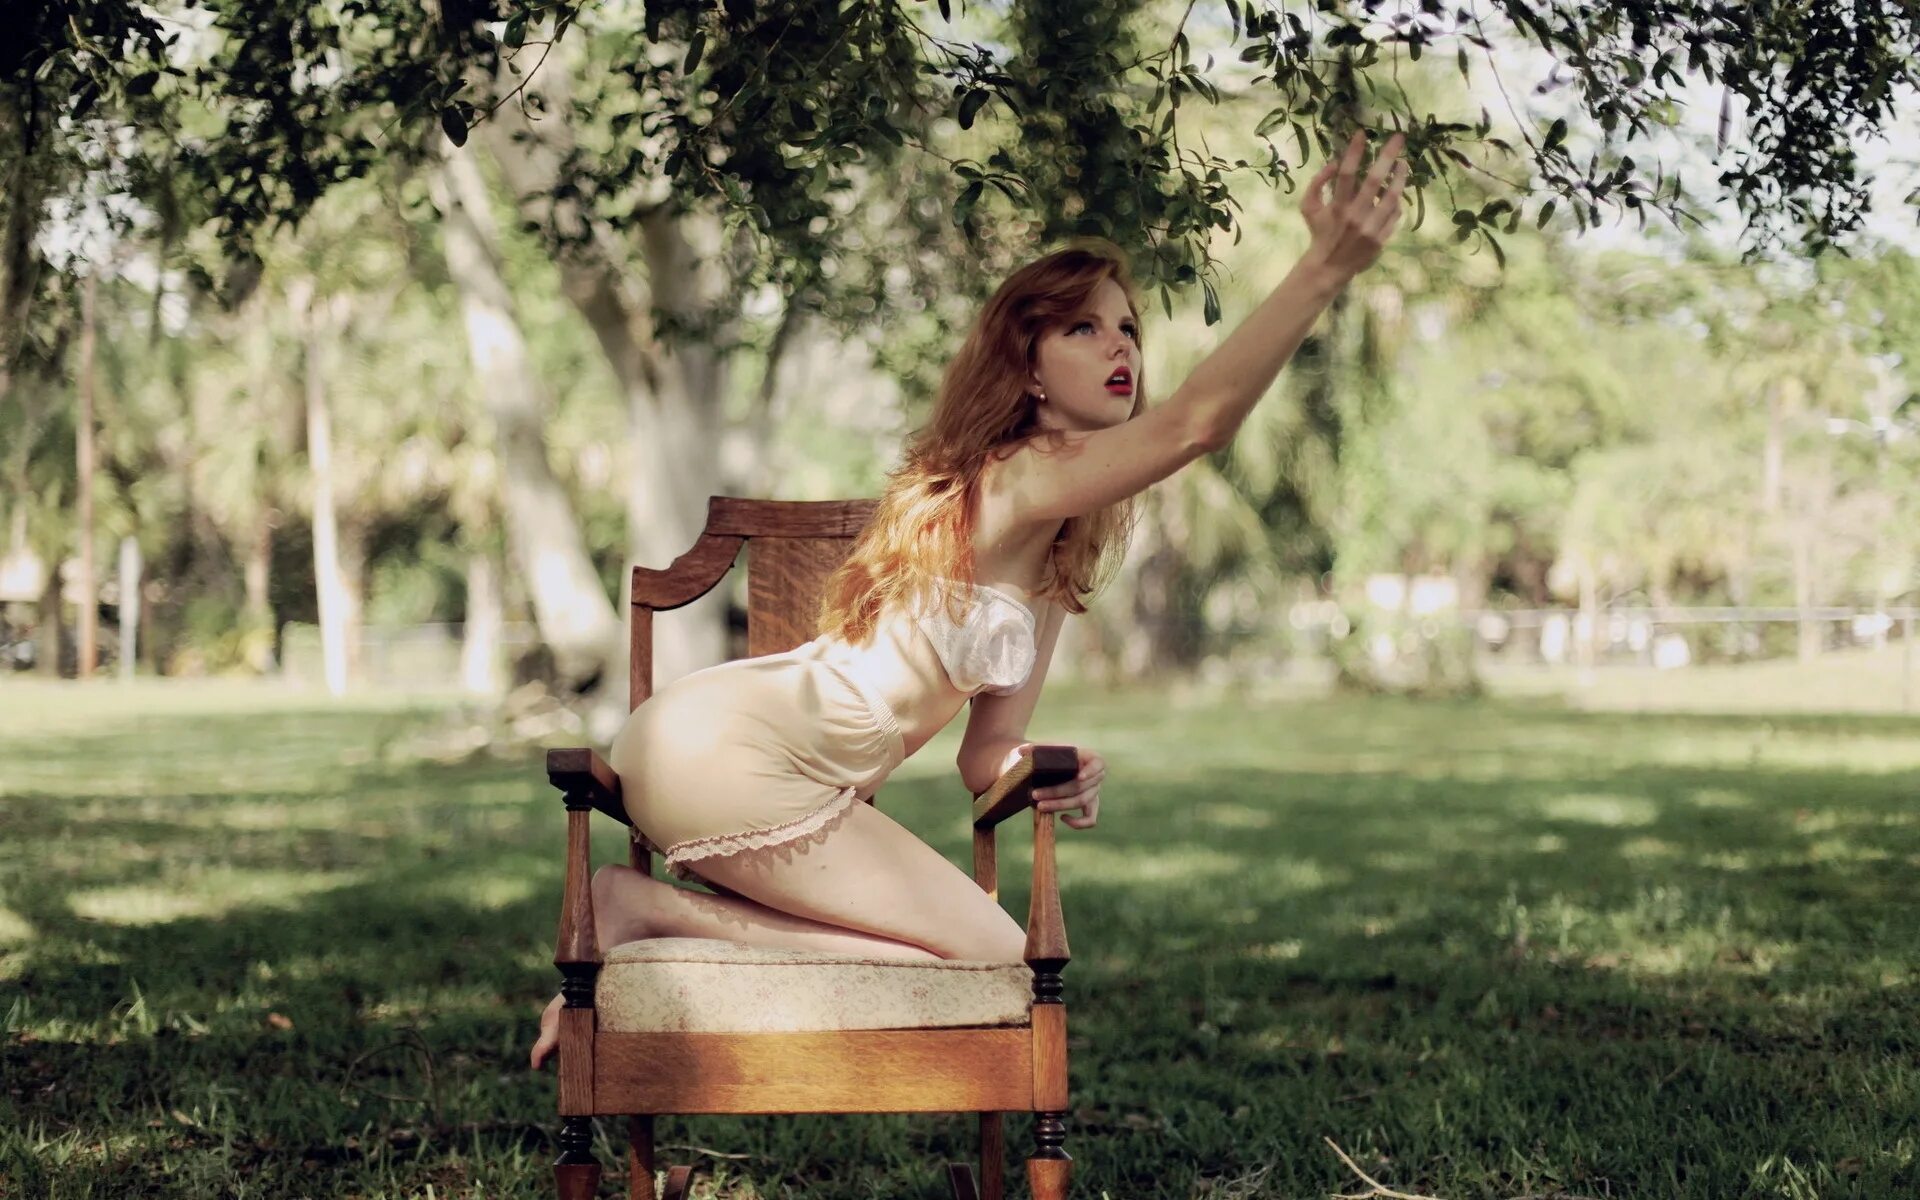 Женщина села на голову. Фотосессия на стуле. Девушка в саду. Девушка на стуле. Фотосессия со стулом на природе.